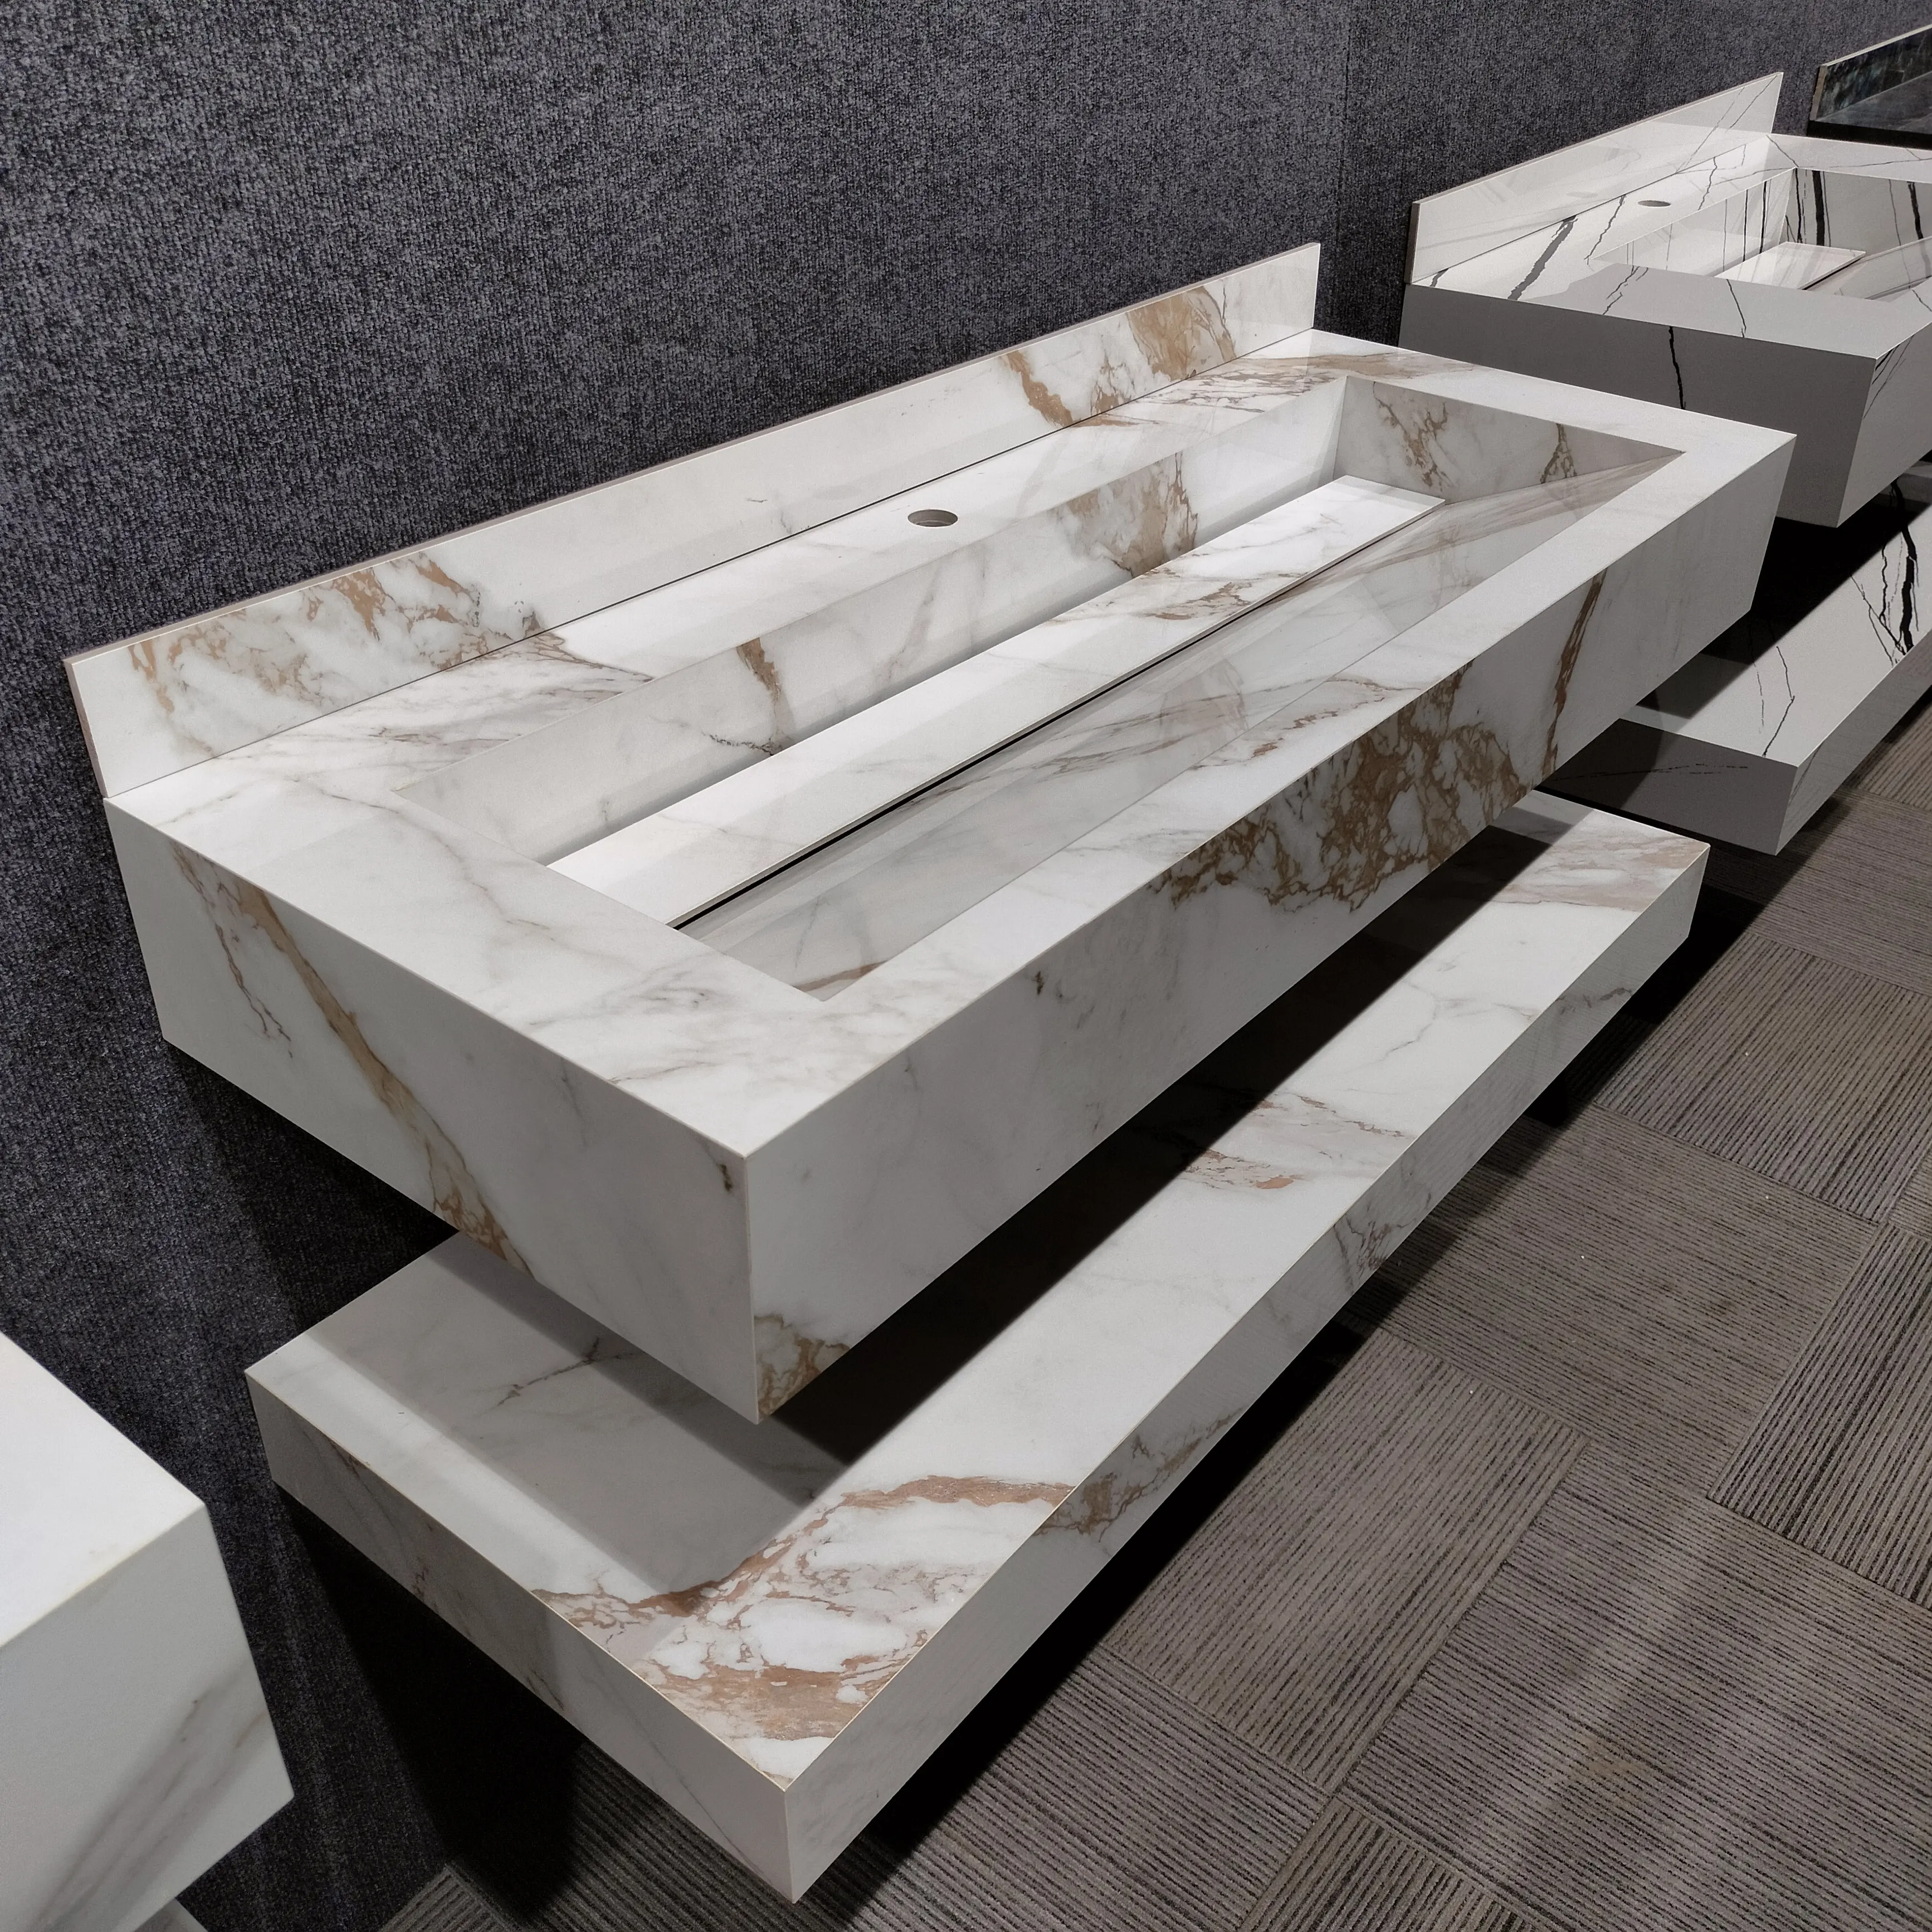 porcelain gvt basins long through sink bathroom sinks with two faucets bathroom